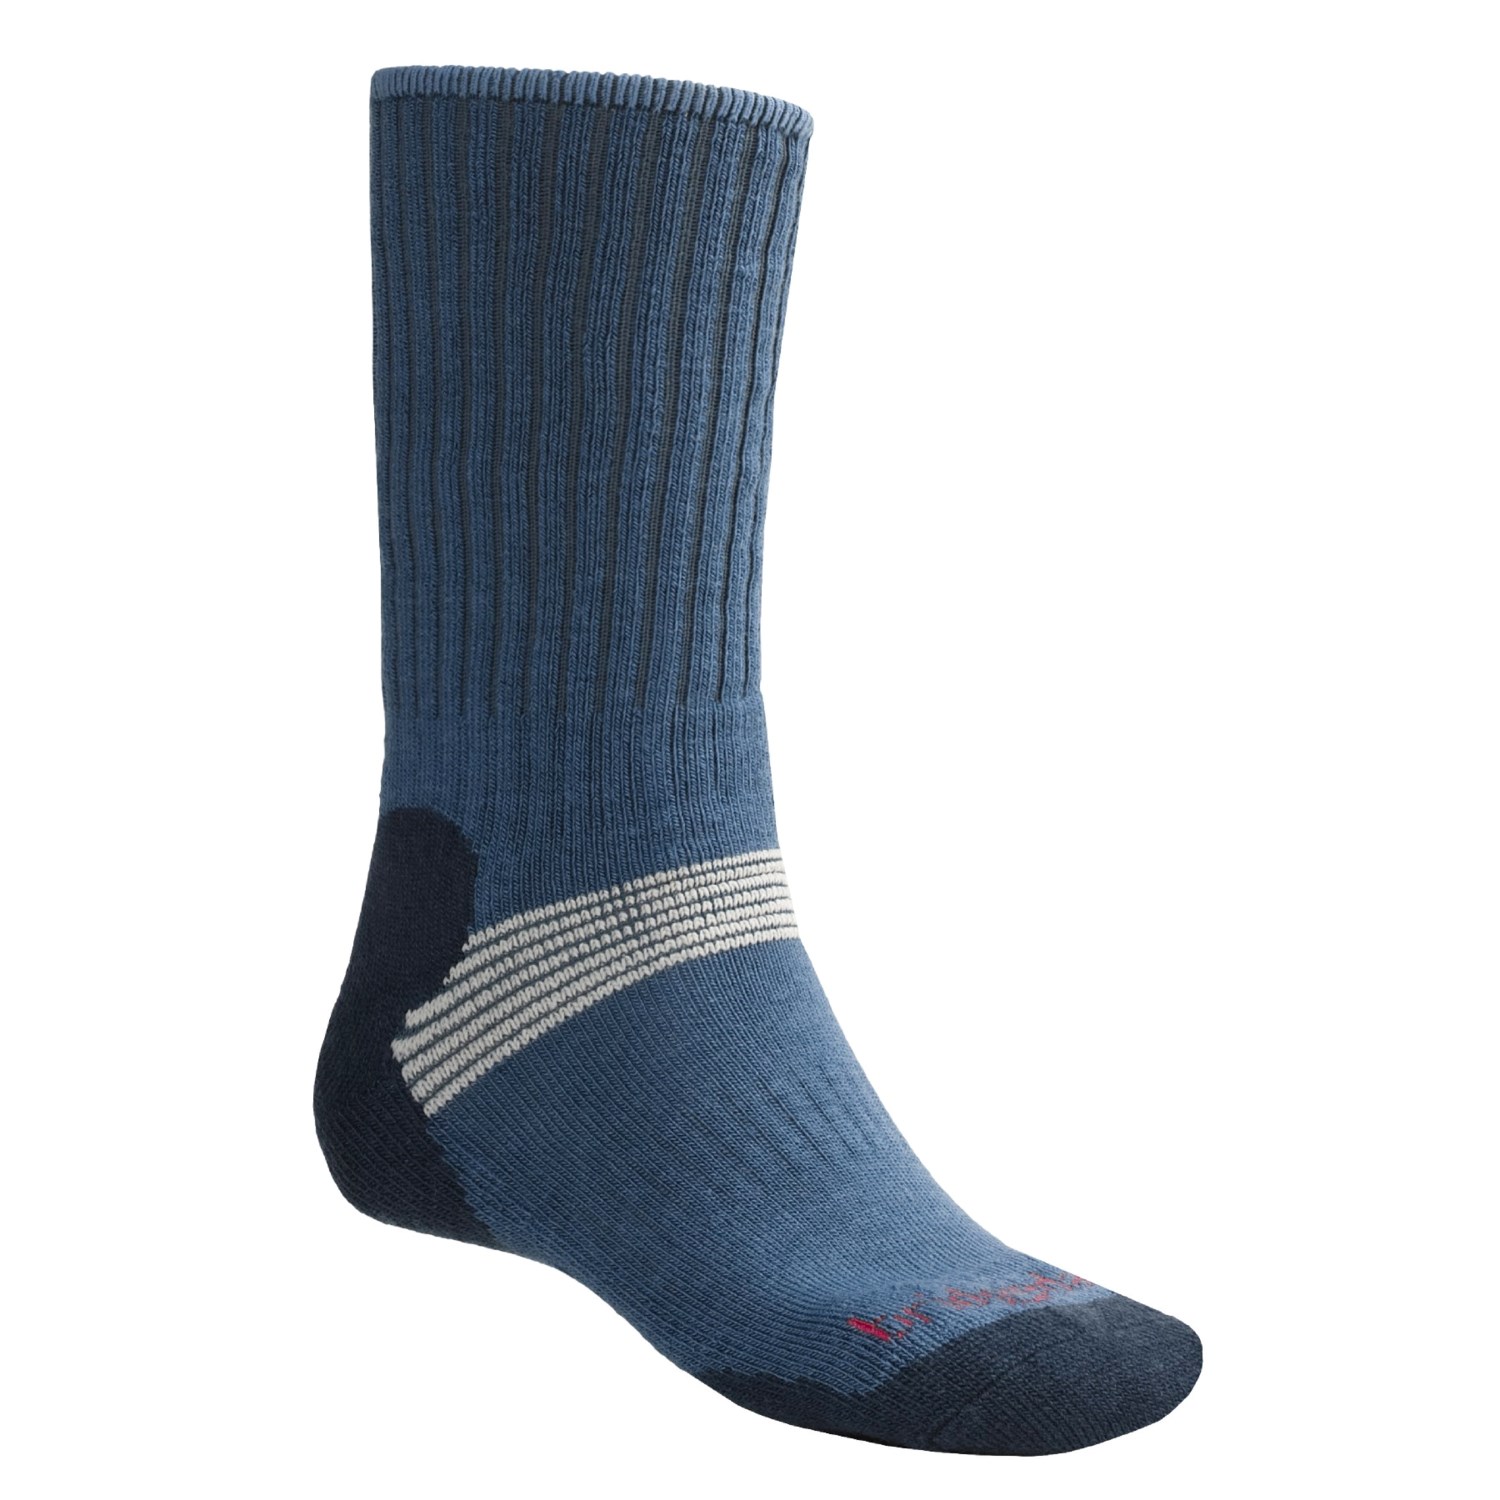 Bridgedale Cross Country Ski Socks for Men and Women in Storm Blue